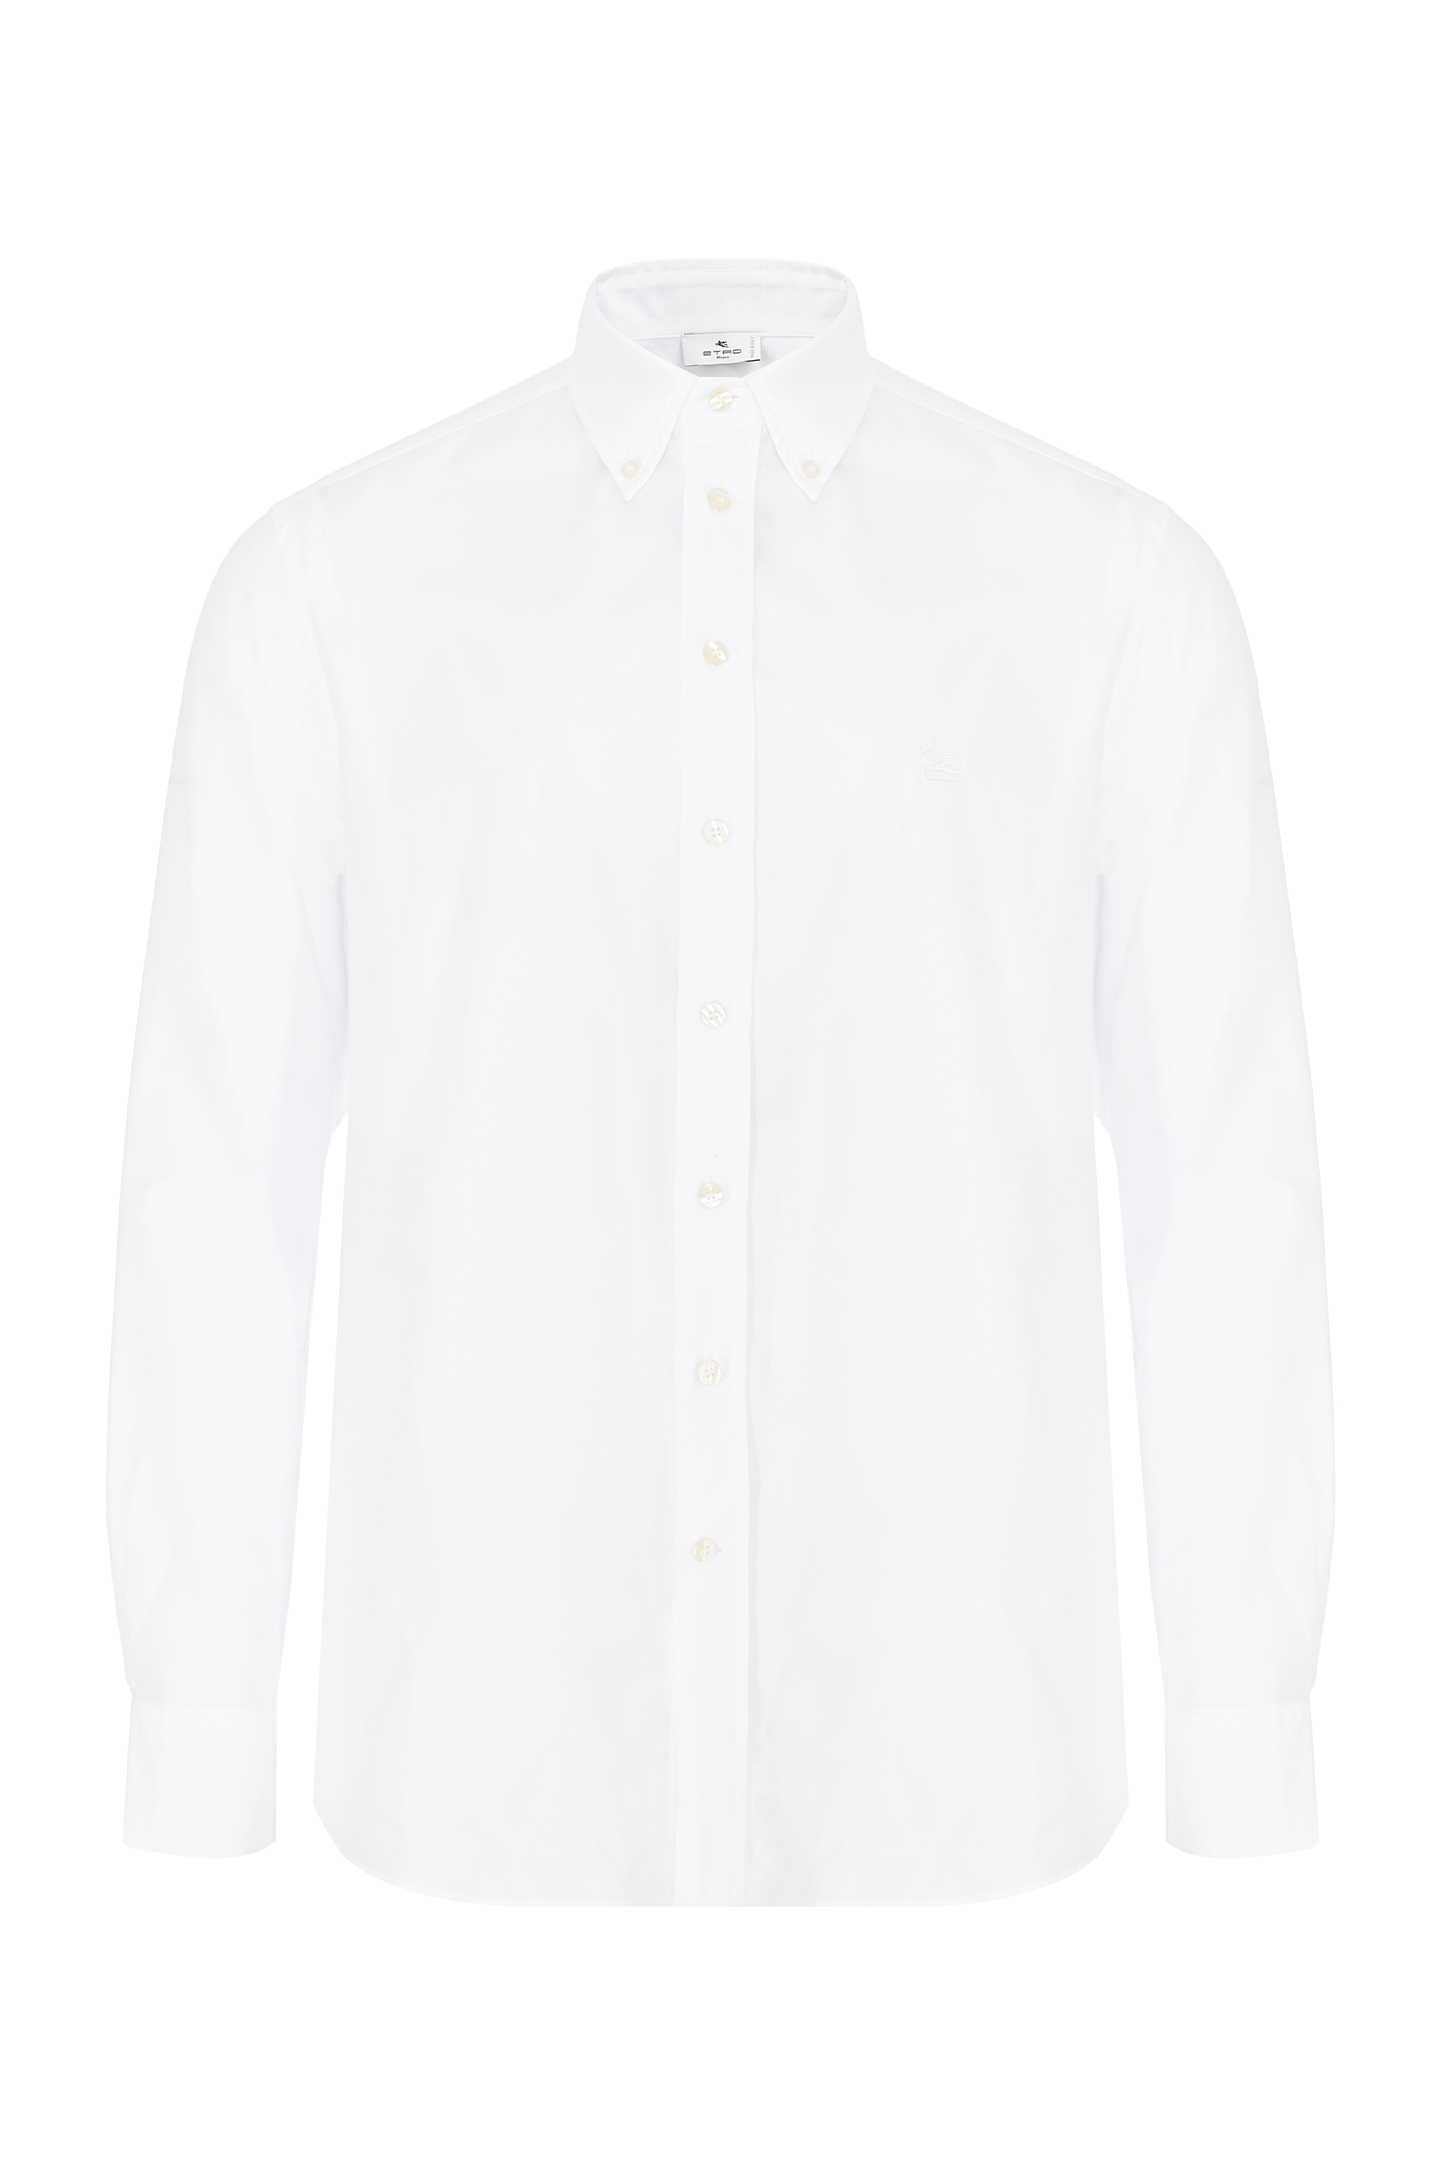 Хлопковая рубашка ETRO MRIB0004 AV201, цвет: Белый, Мужской